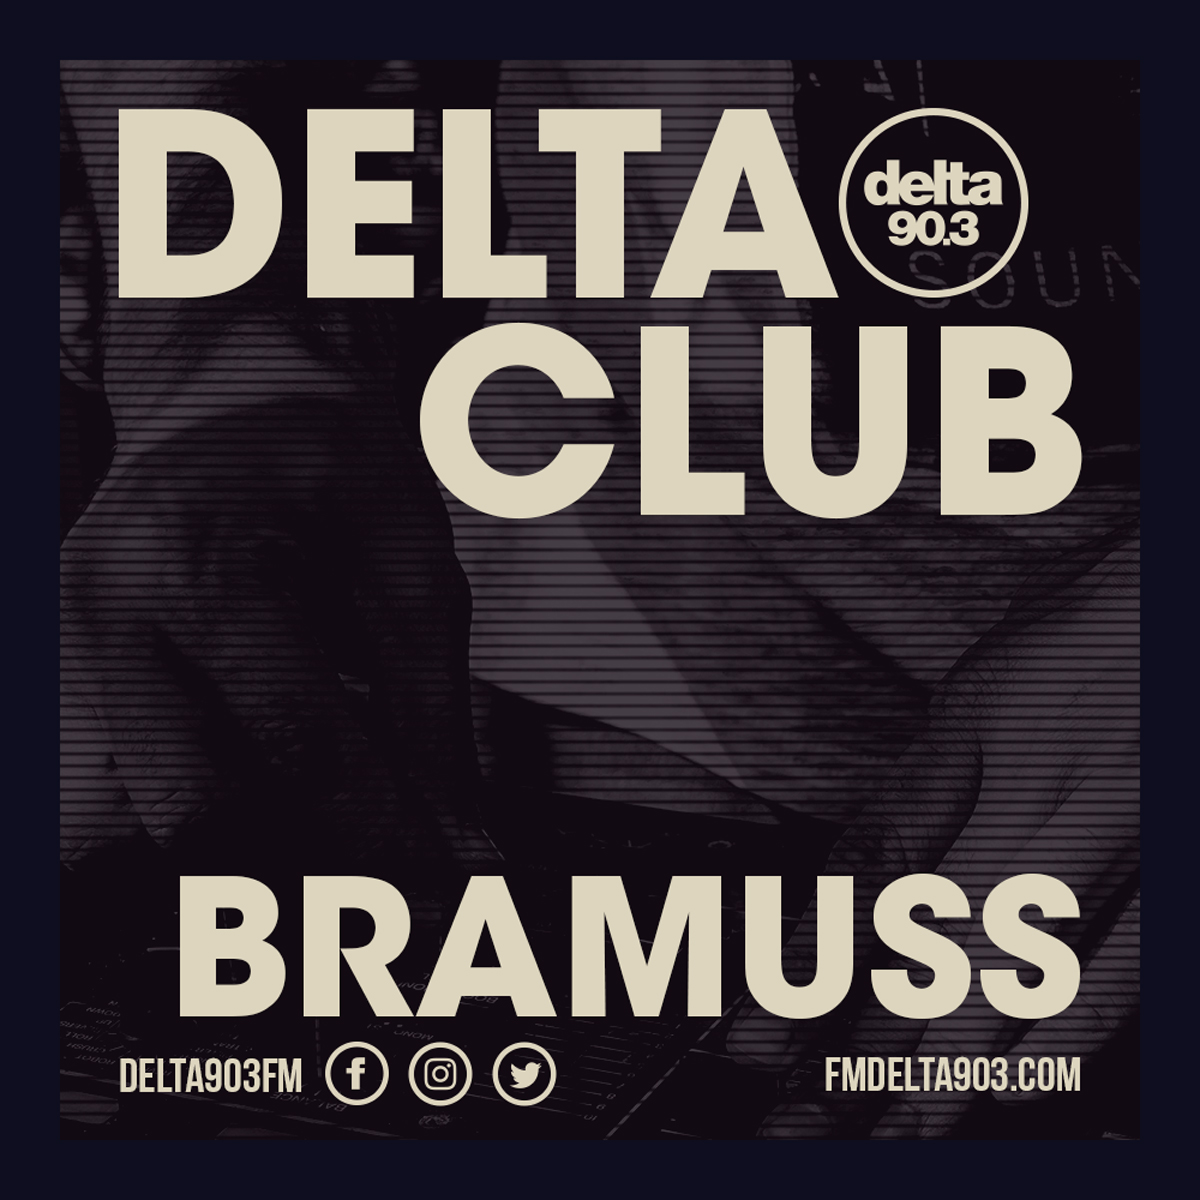 Delta Podcasts - Delta Club presents Bramuss (25.06.2018)